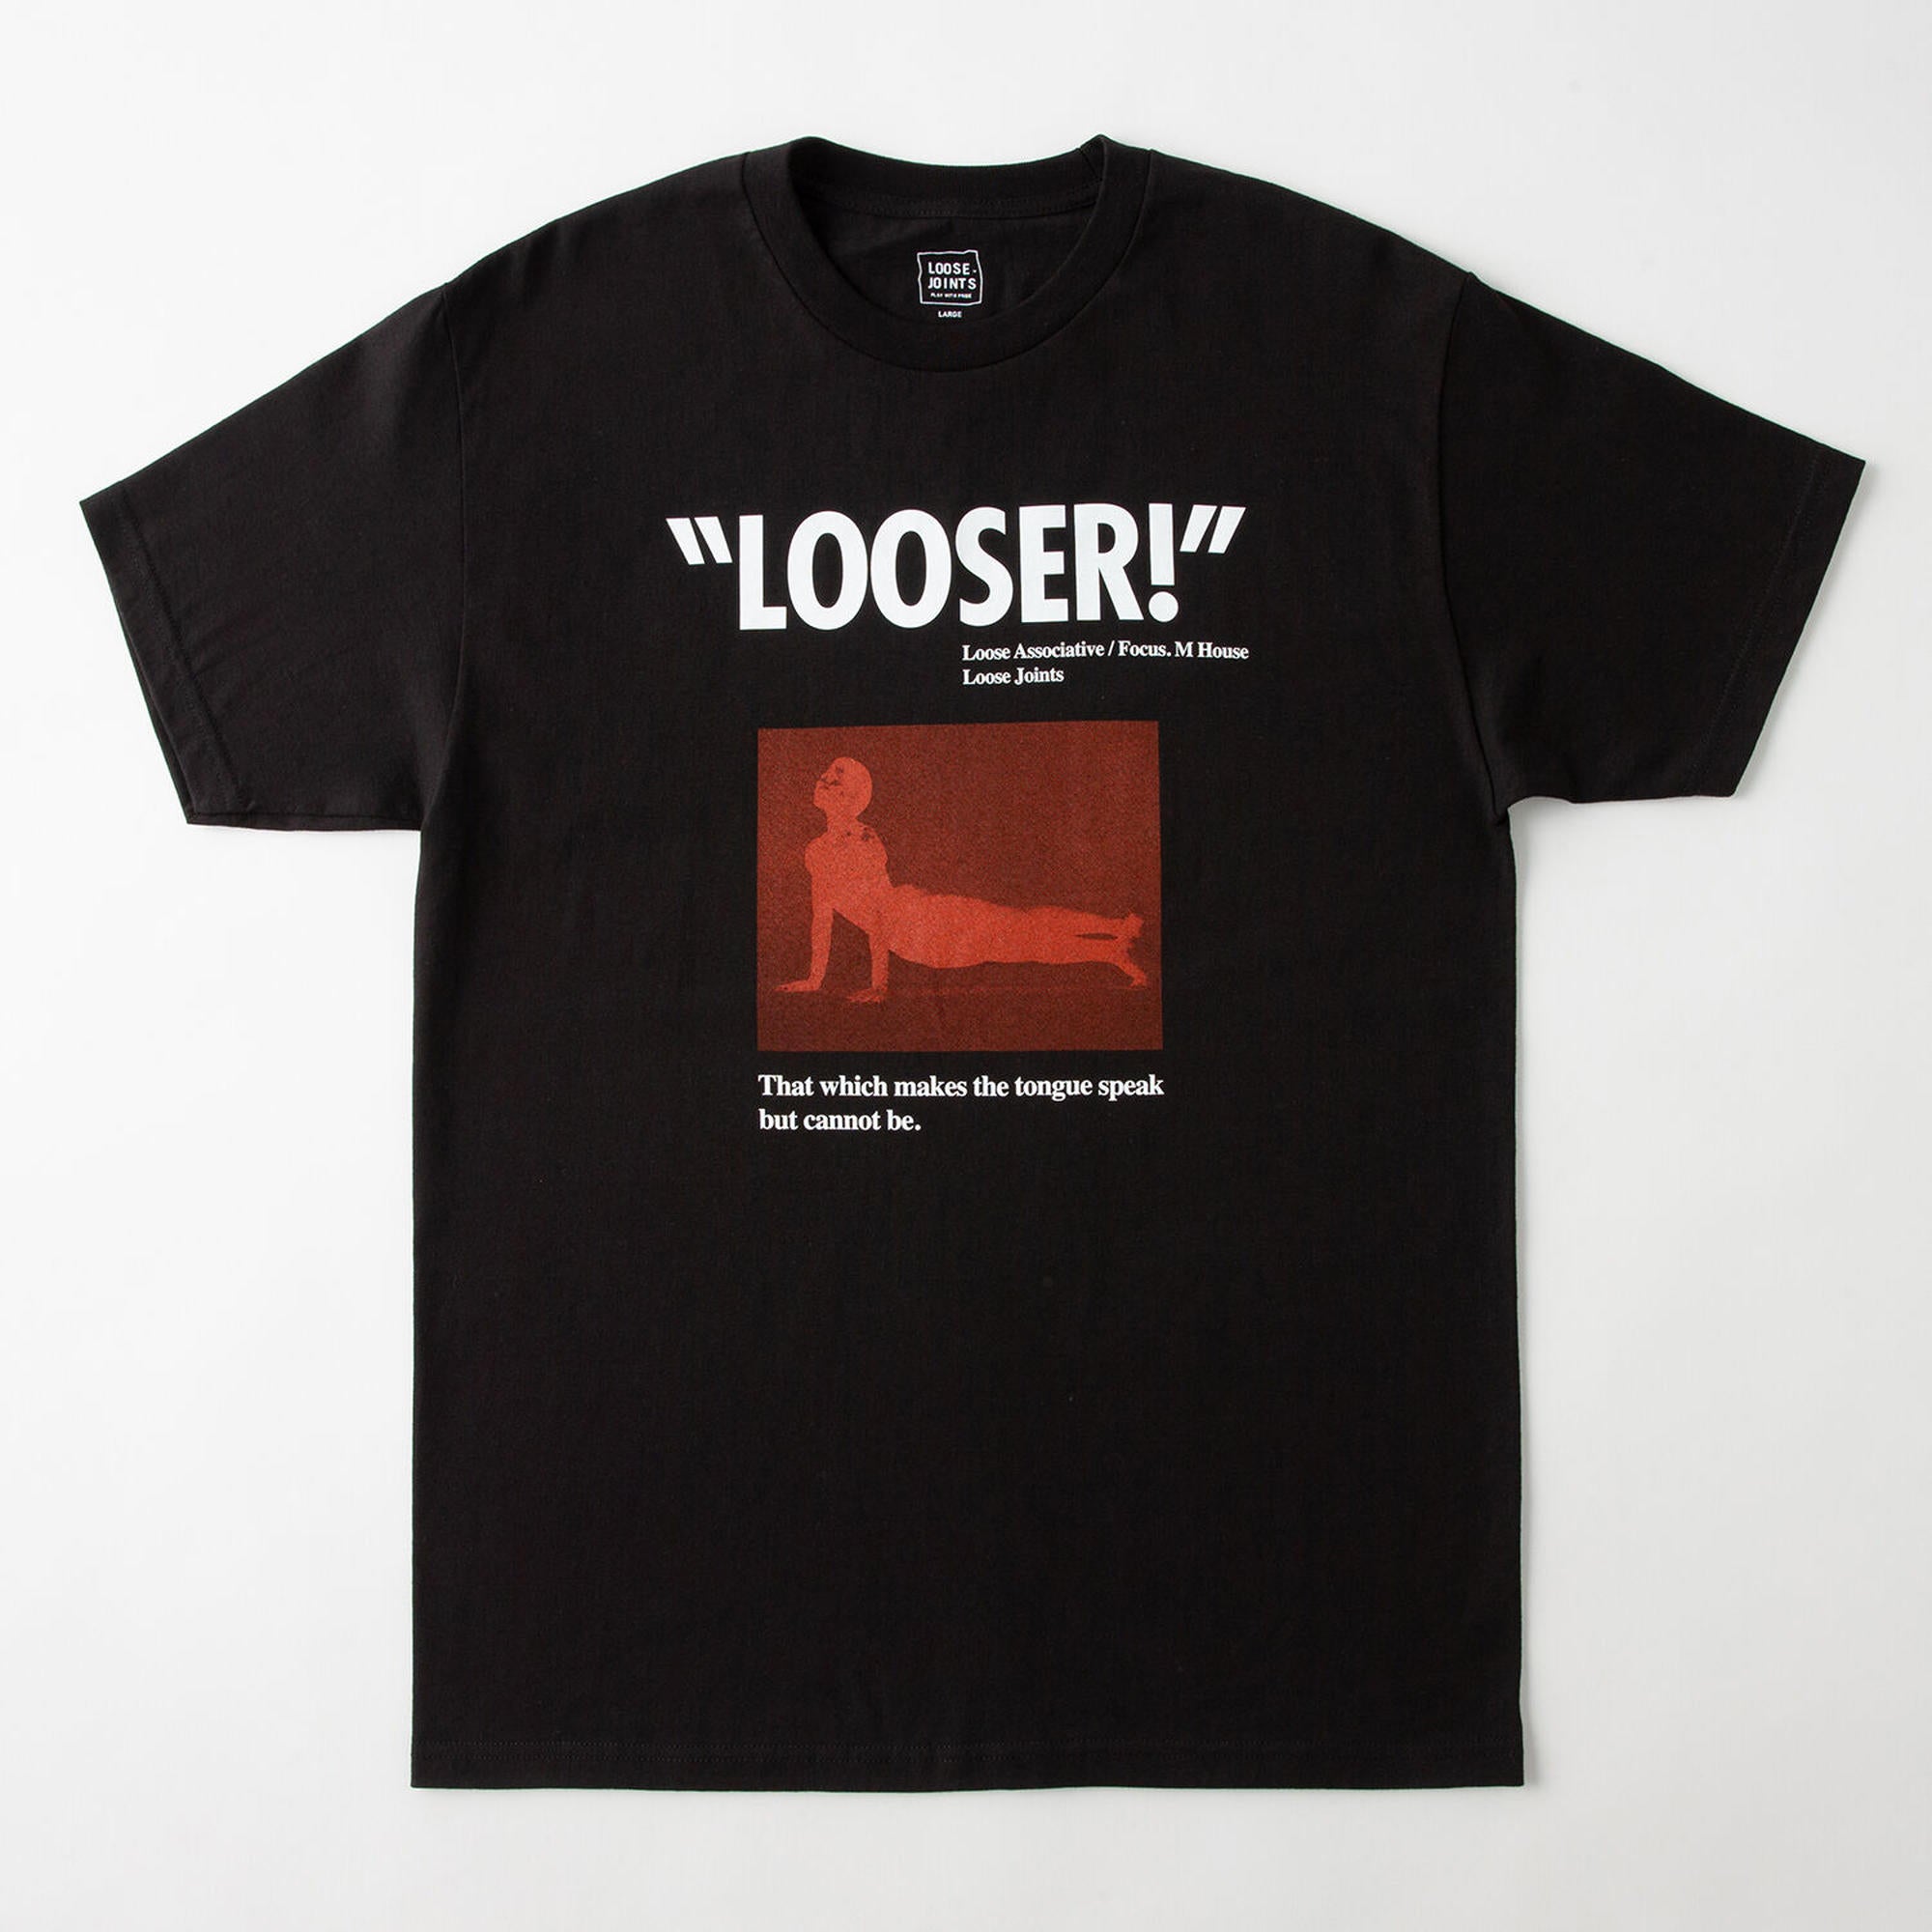 CLAY ARLINGTON - 'Looser!' S/S TEE